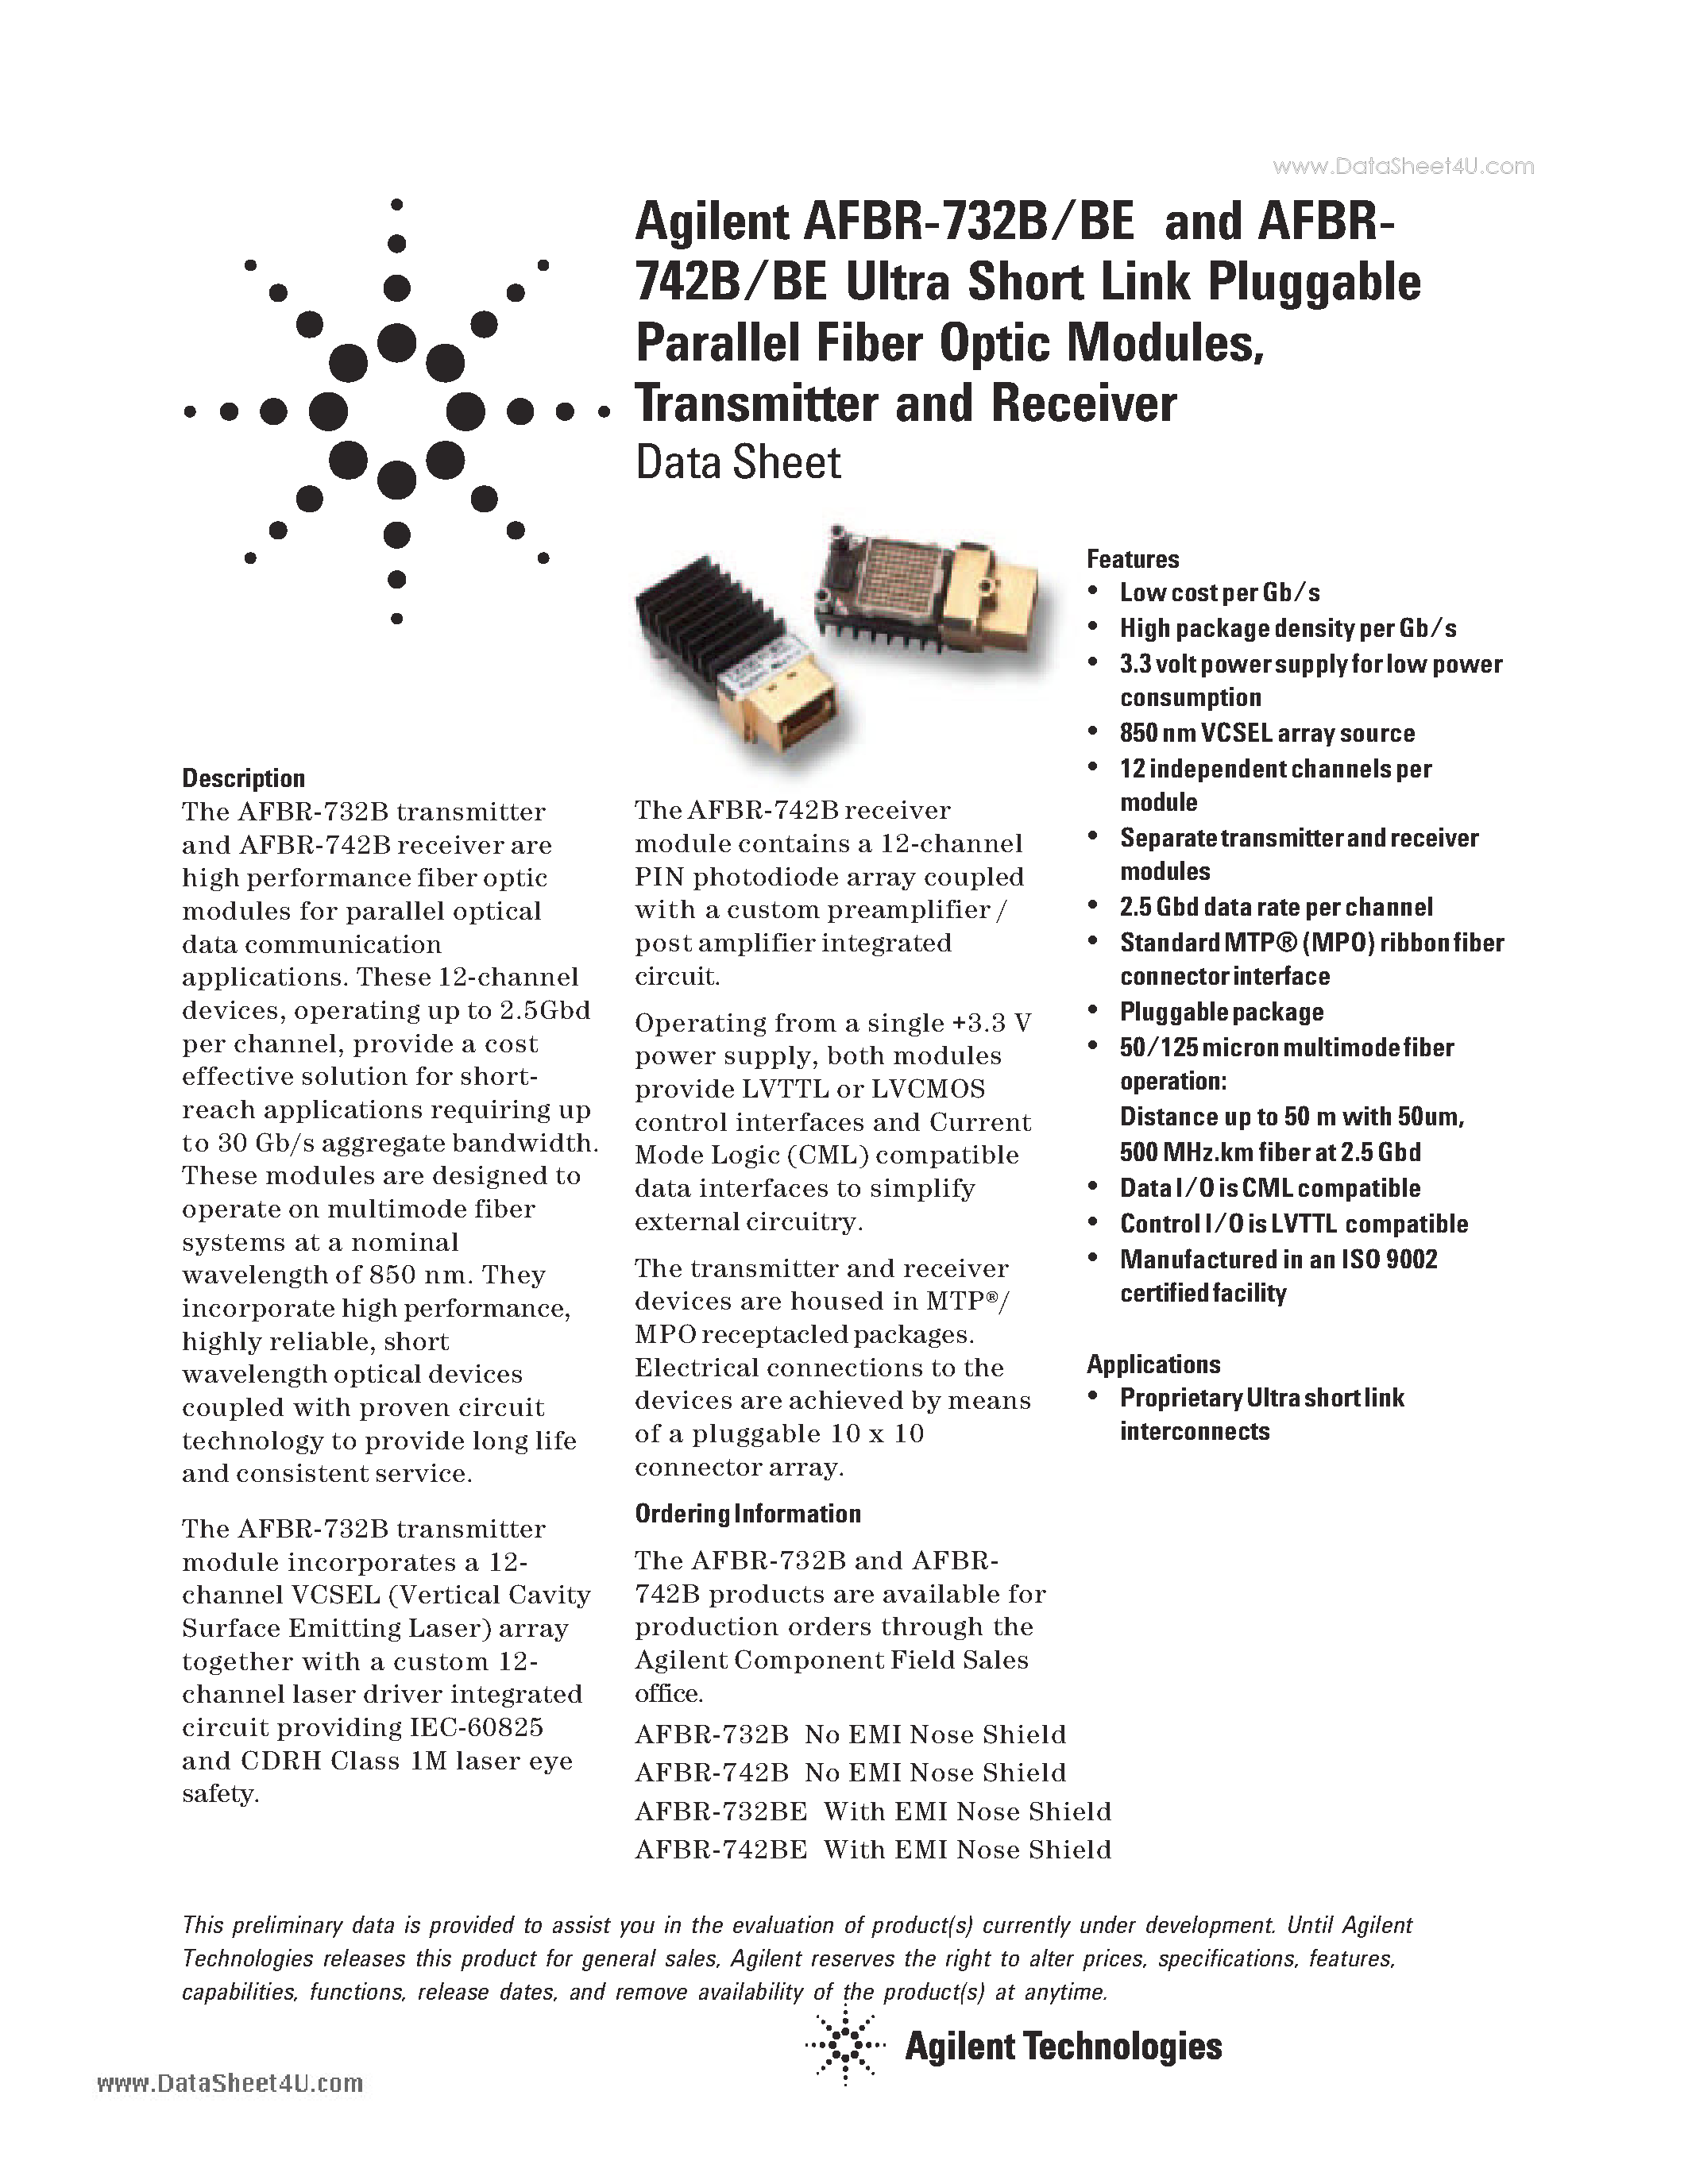 Даташит AFBR-732B - Ultra Short Link Pluggable Parallel Fiber Optic Modules страница 1